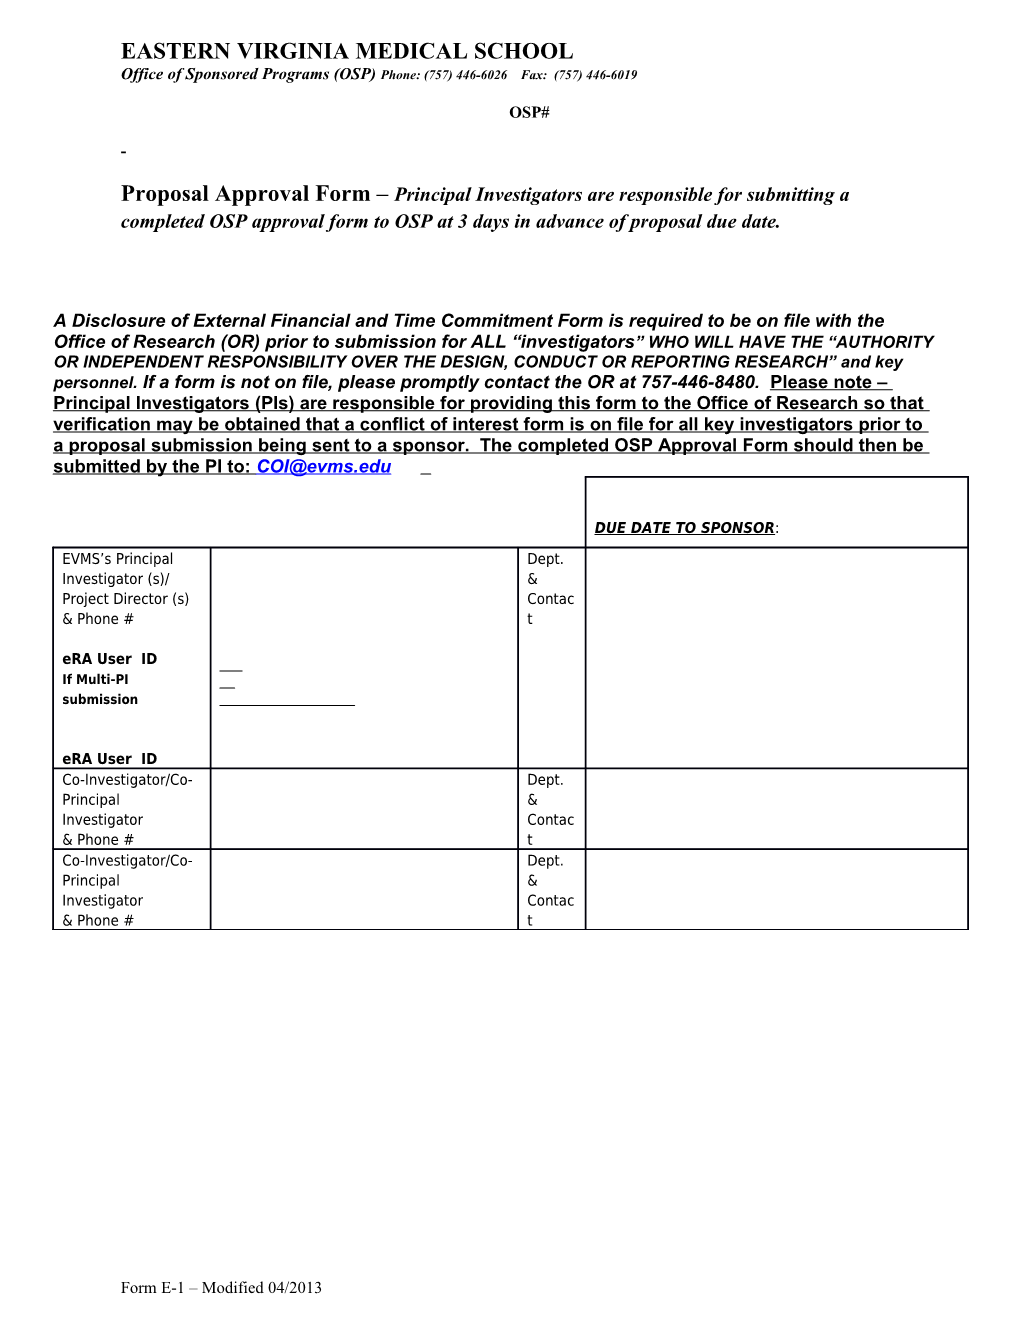 OSP Proposal Approval Form